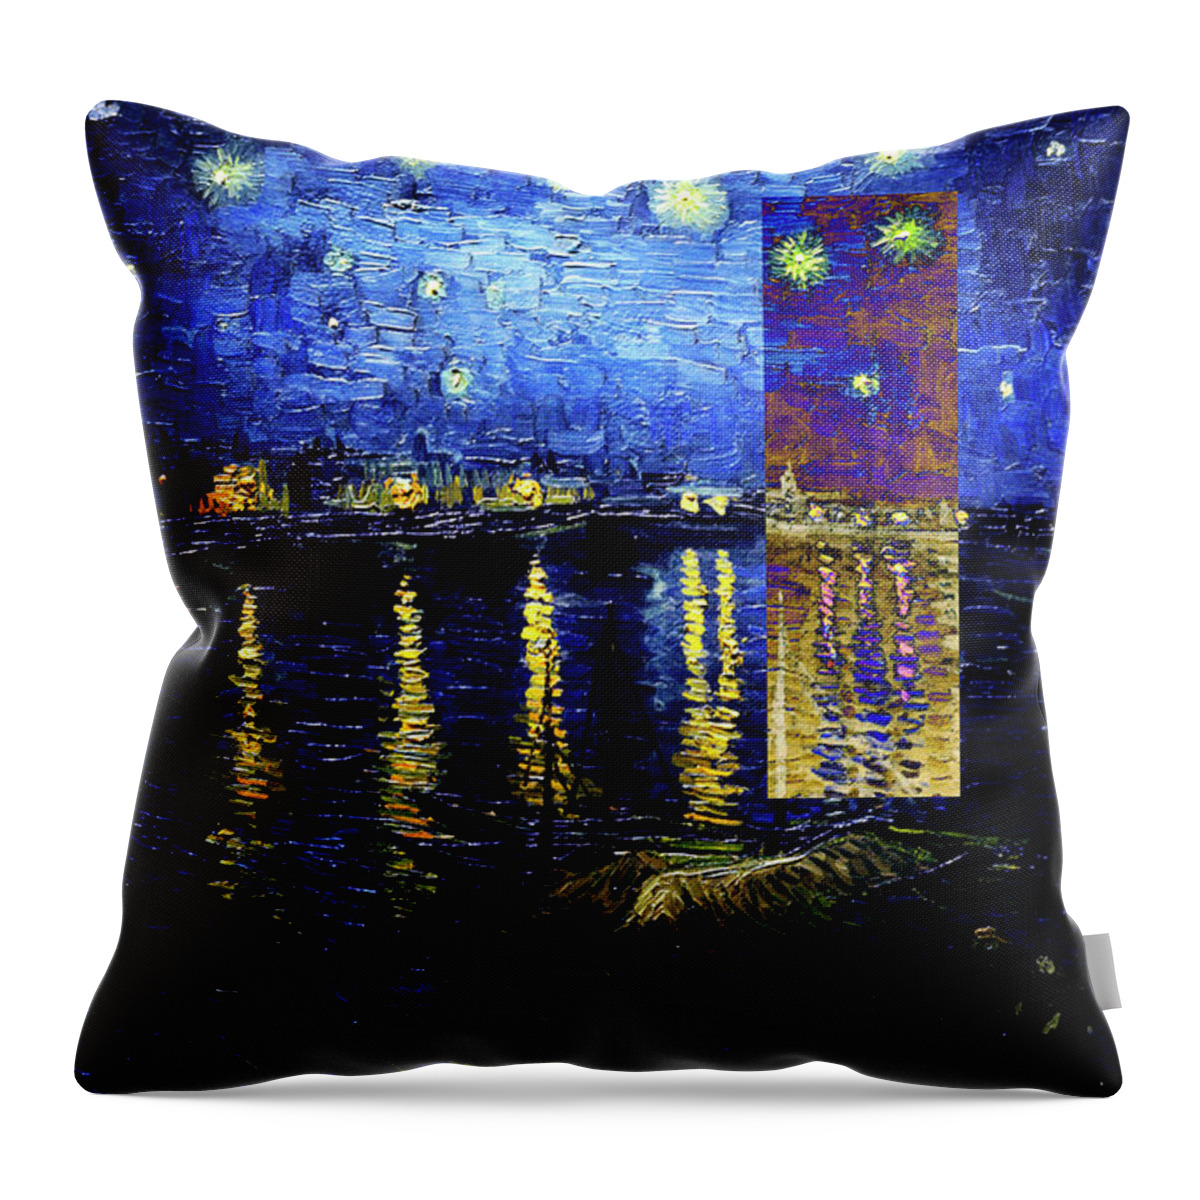 Postmodernism Throw Pillow featuring the digital art Layered 15 van Gogh by David Bridburg